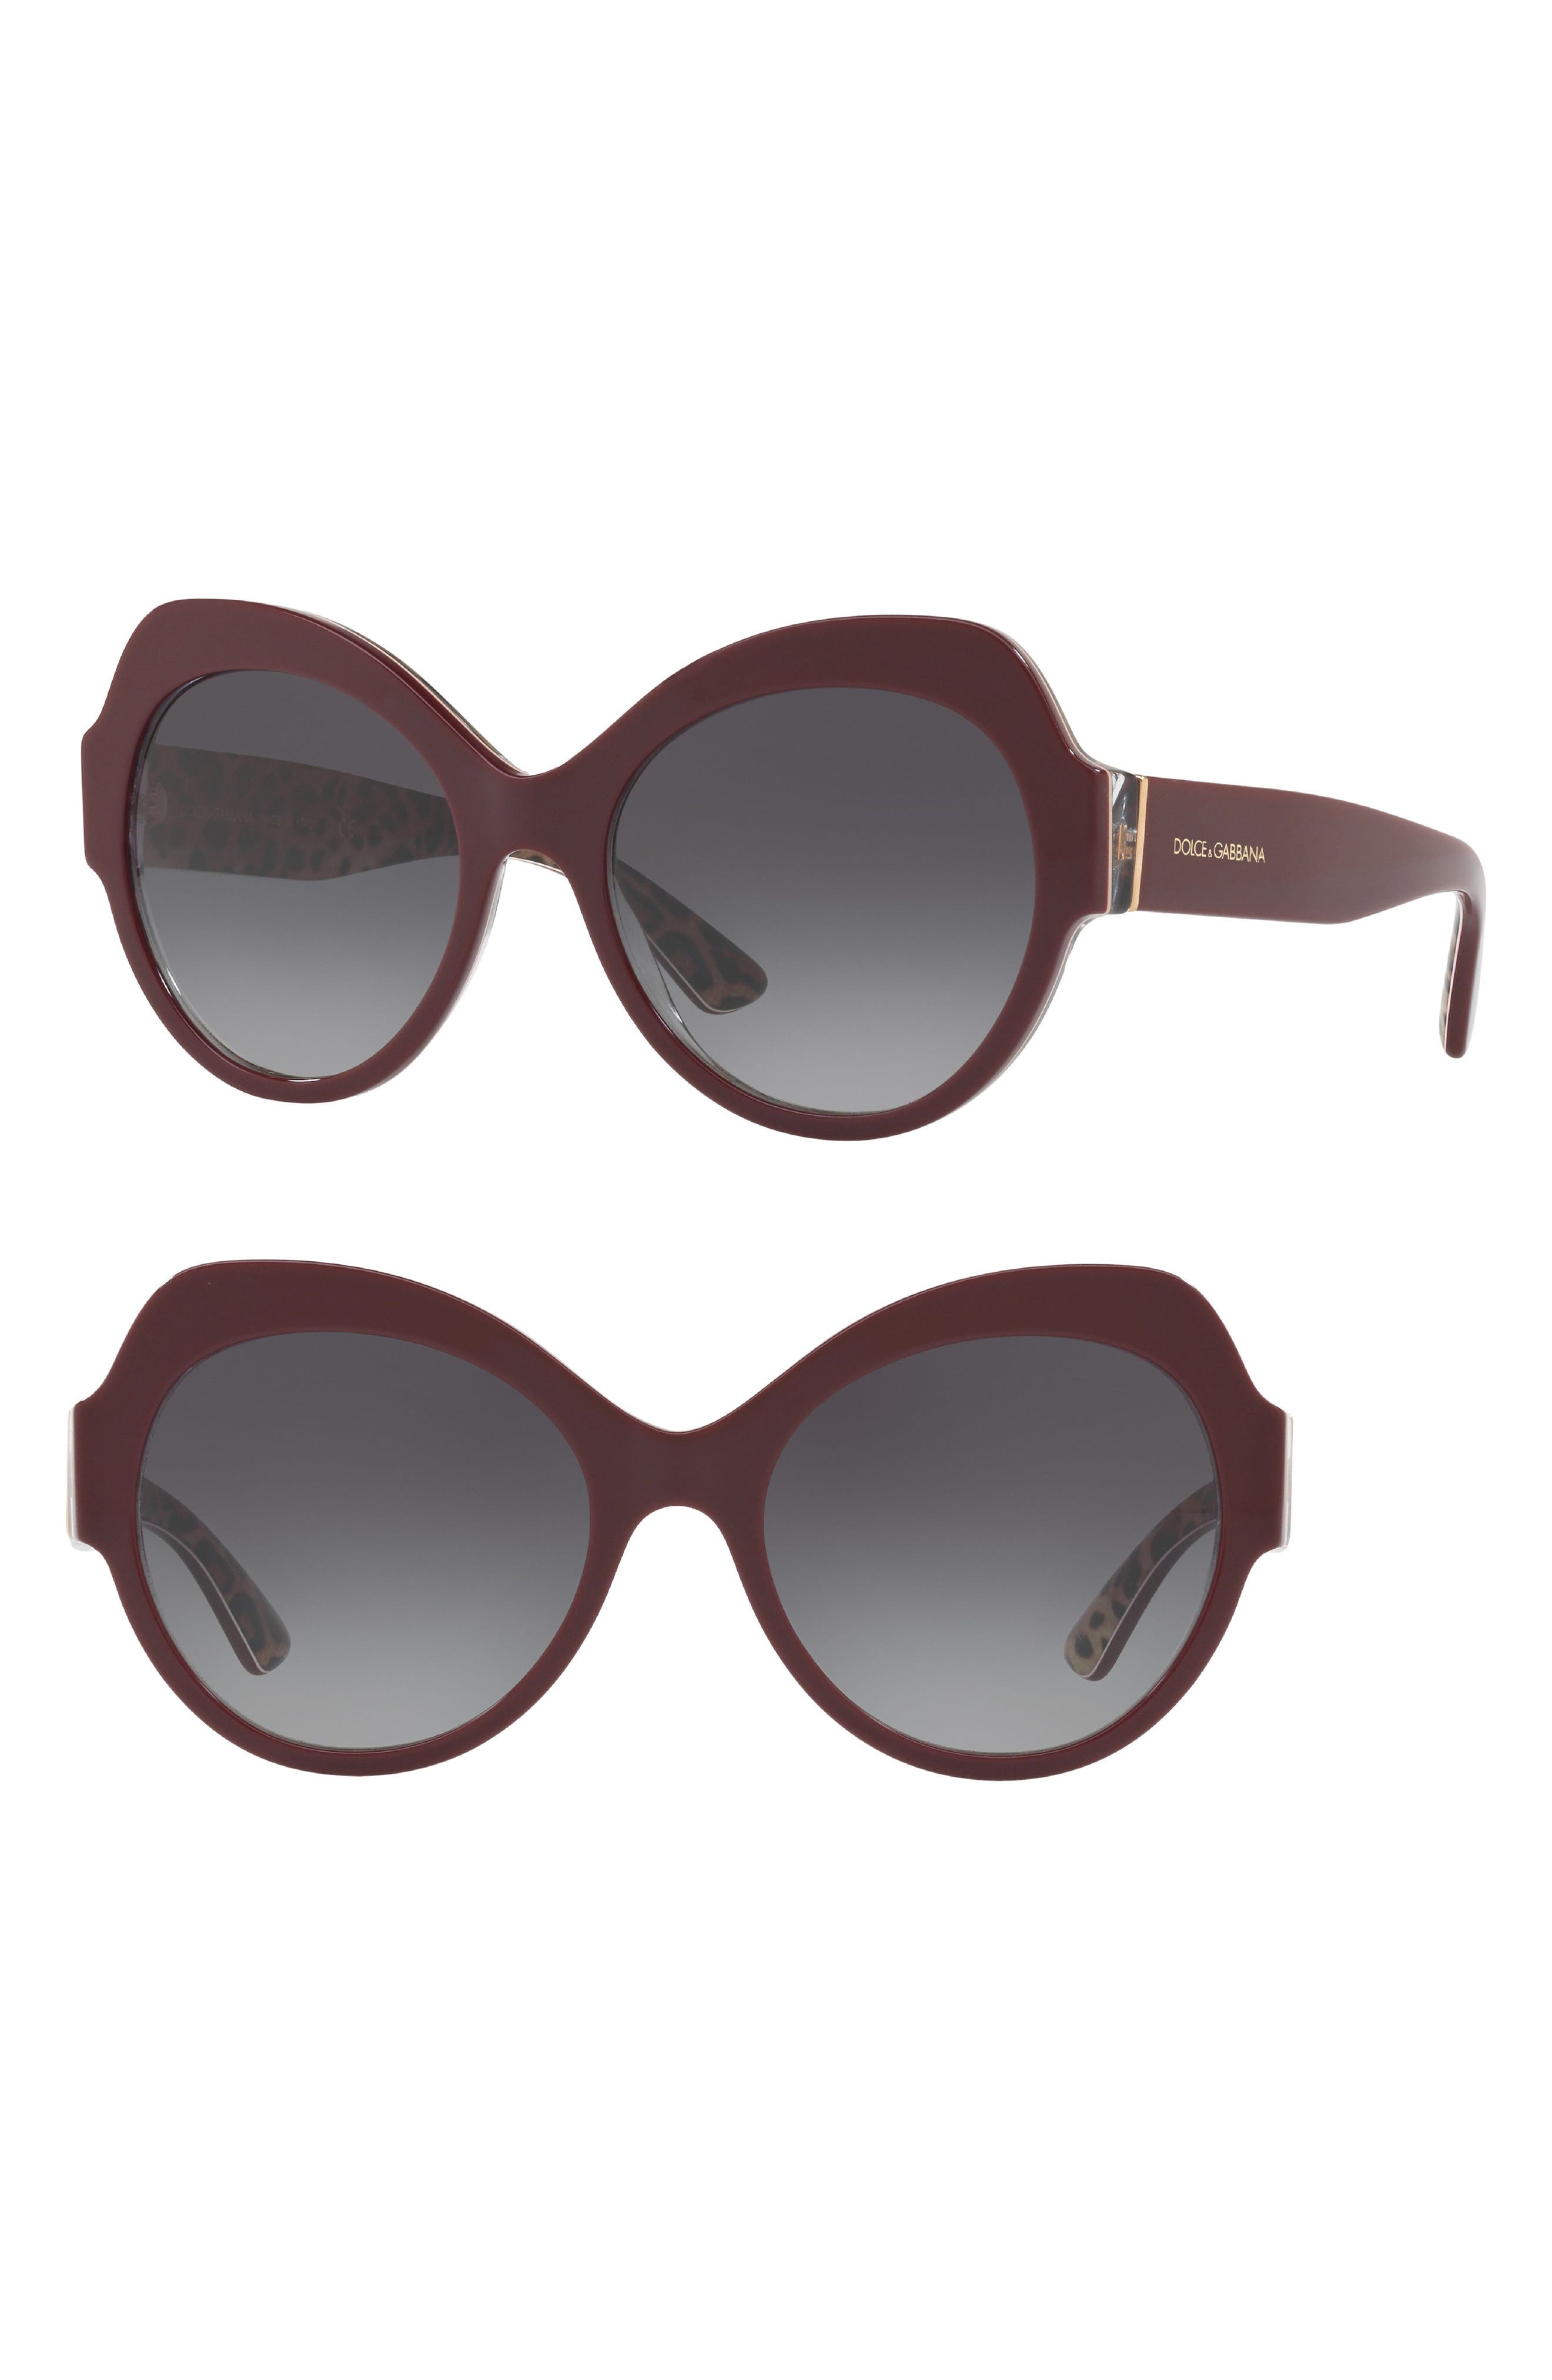 dolce and gabbana sunglasses nordstrom rack